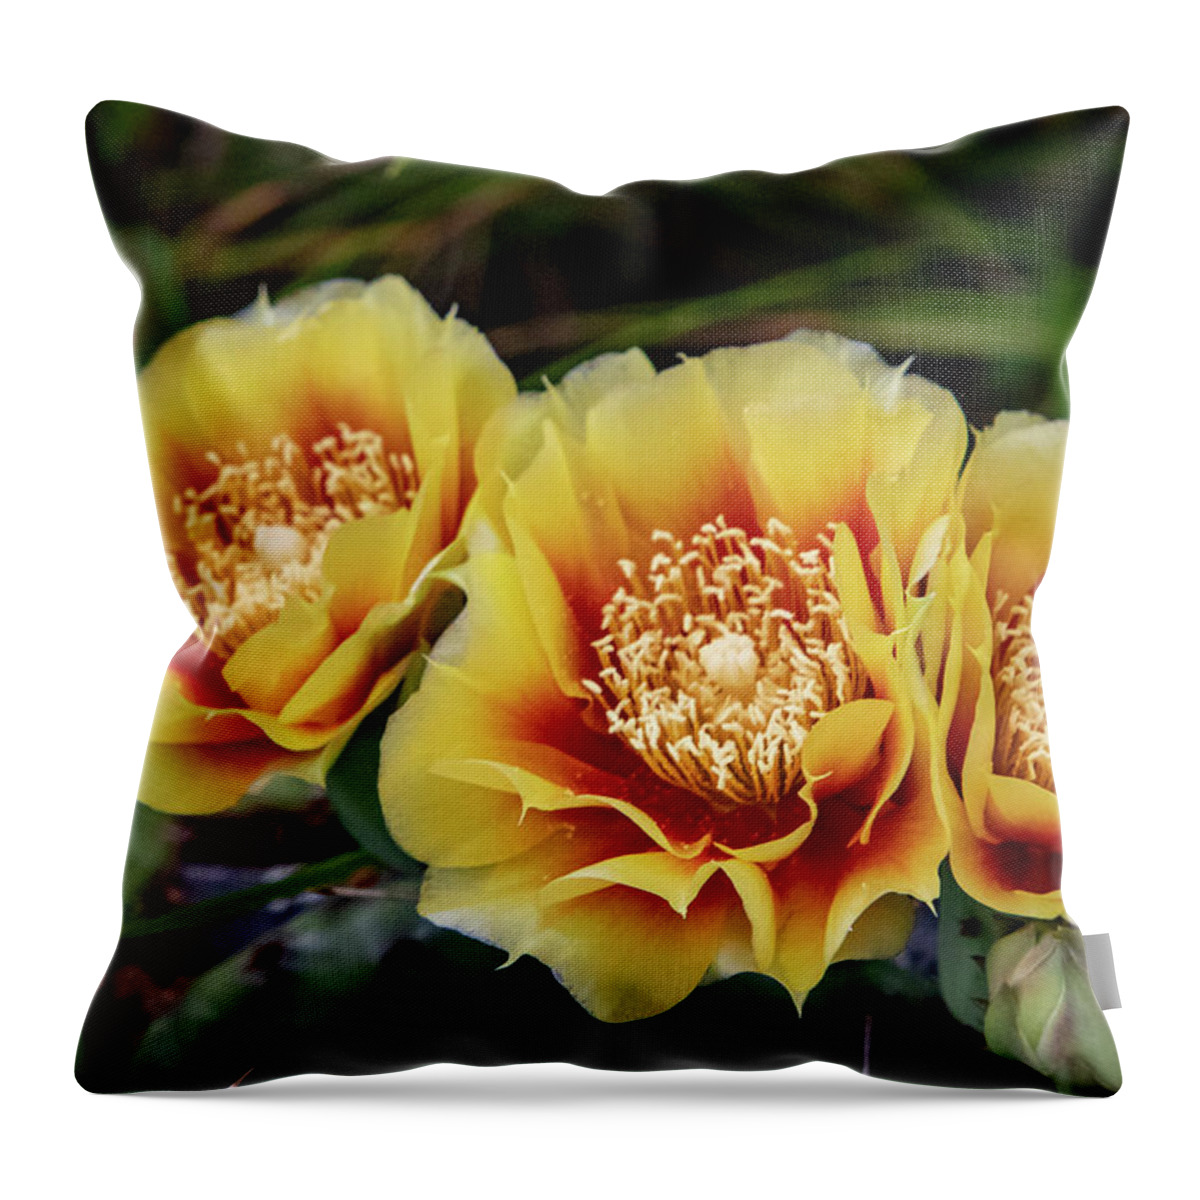 Flower Throw Pillow featuring the photograph Cactus Flowers by Matt Sexton